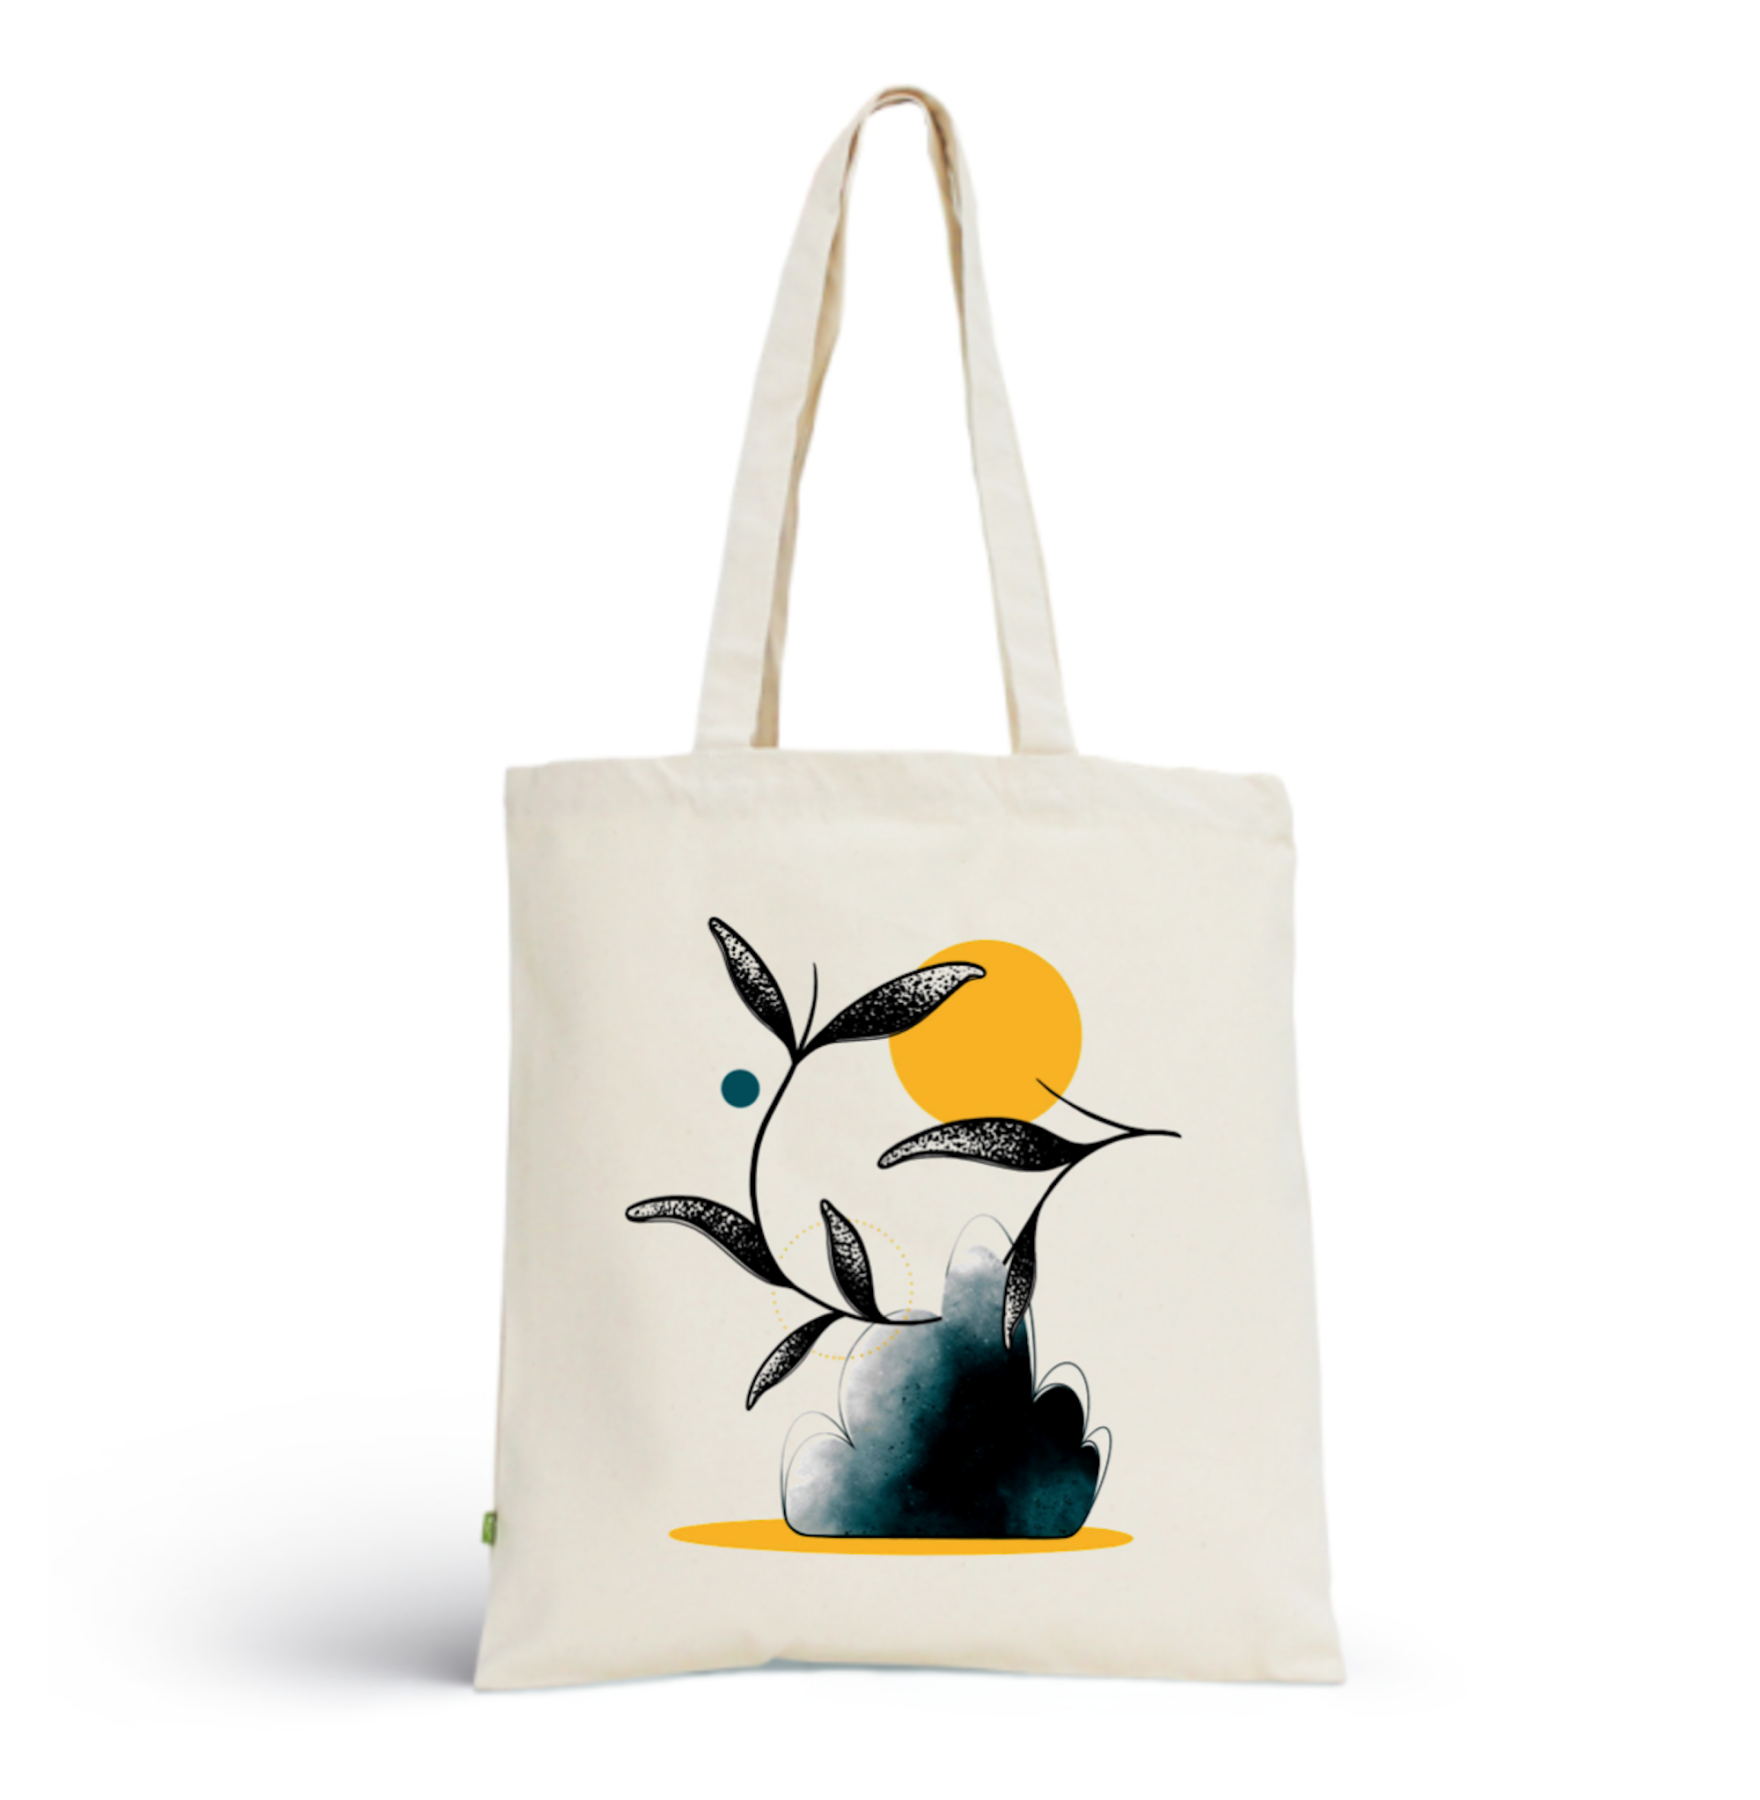 TOTE BAG BEIGE - Soleil Levant - Illustration soleil, feuilles, nature, bleu, jaune